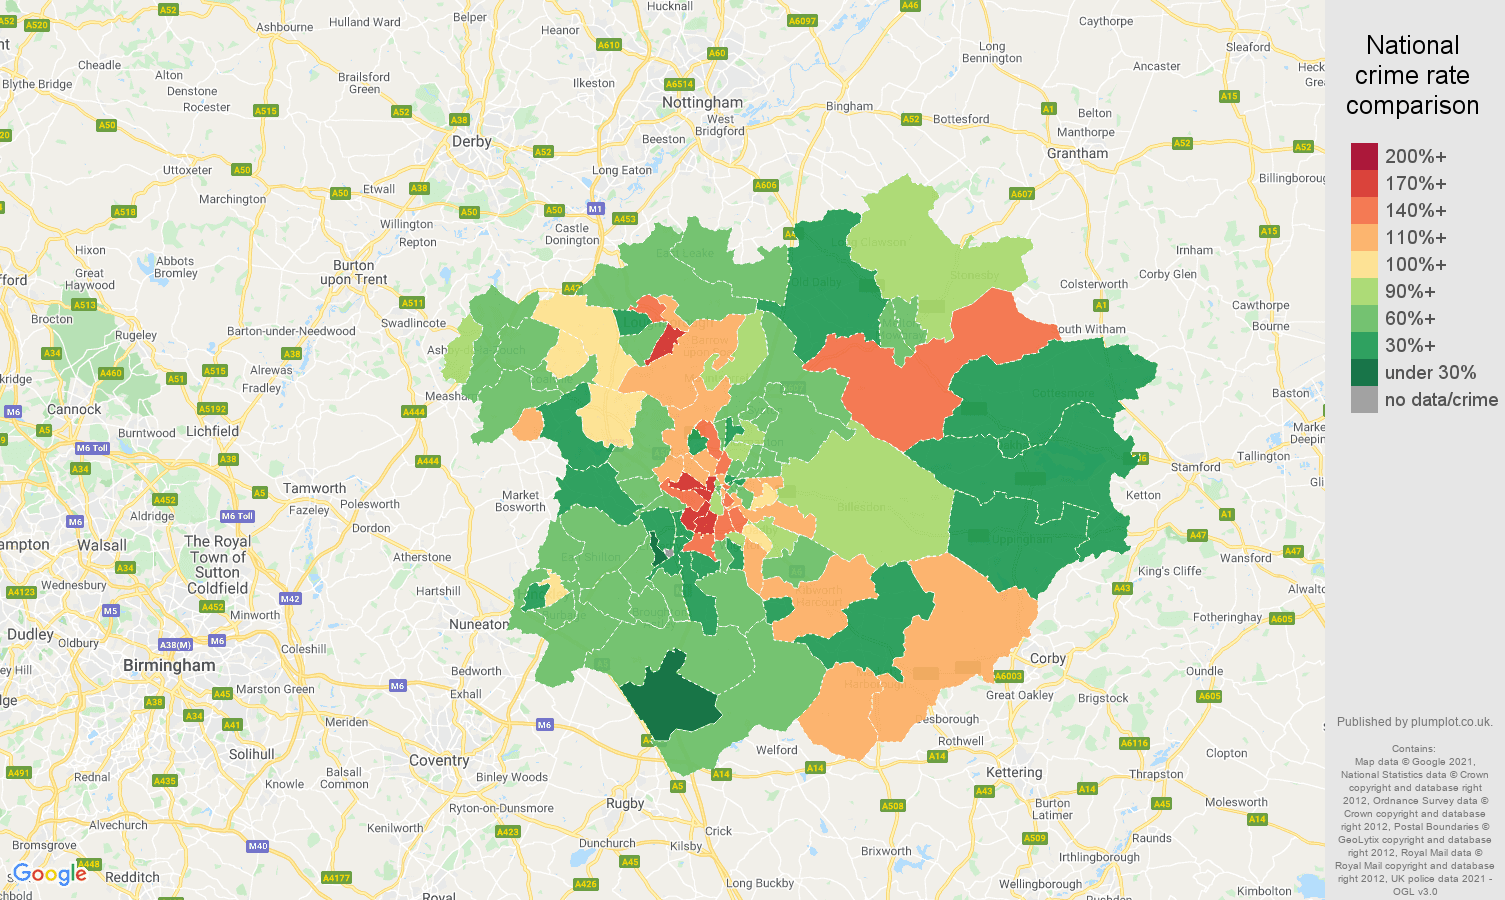 Leicester burglary crime rate comparison map